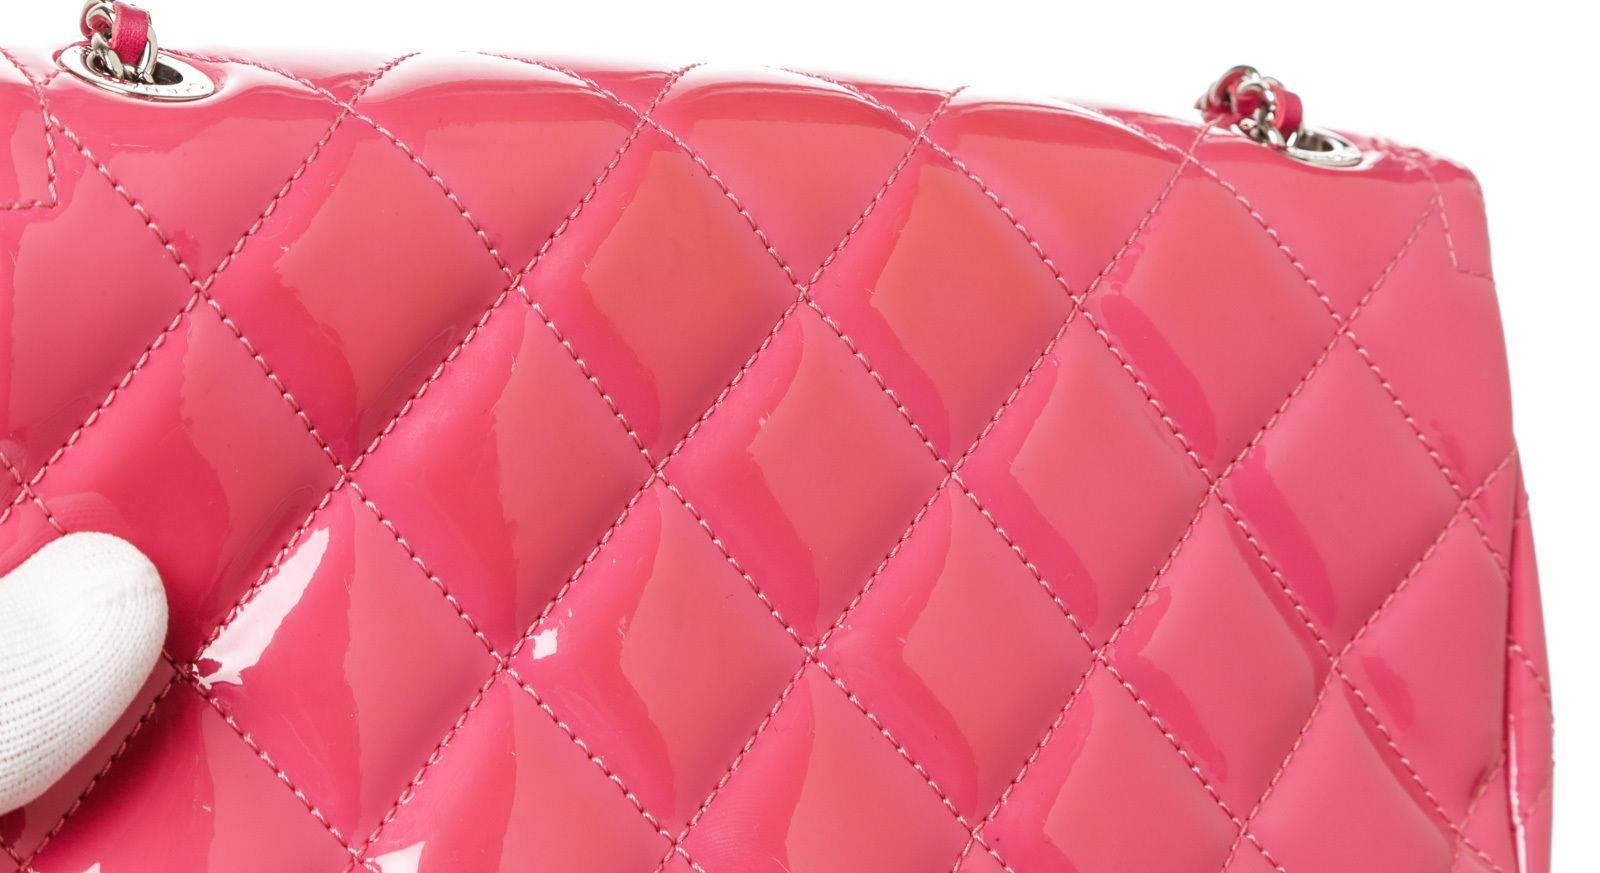 Chanel Pink Quilted Patent Leather Flap Shoulder Handbag For Sale 3